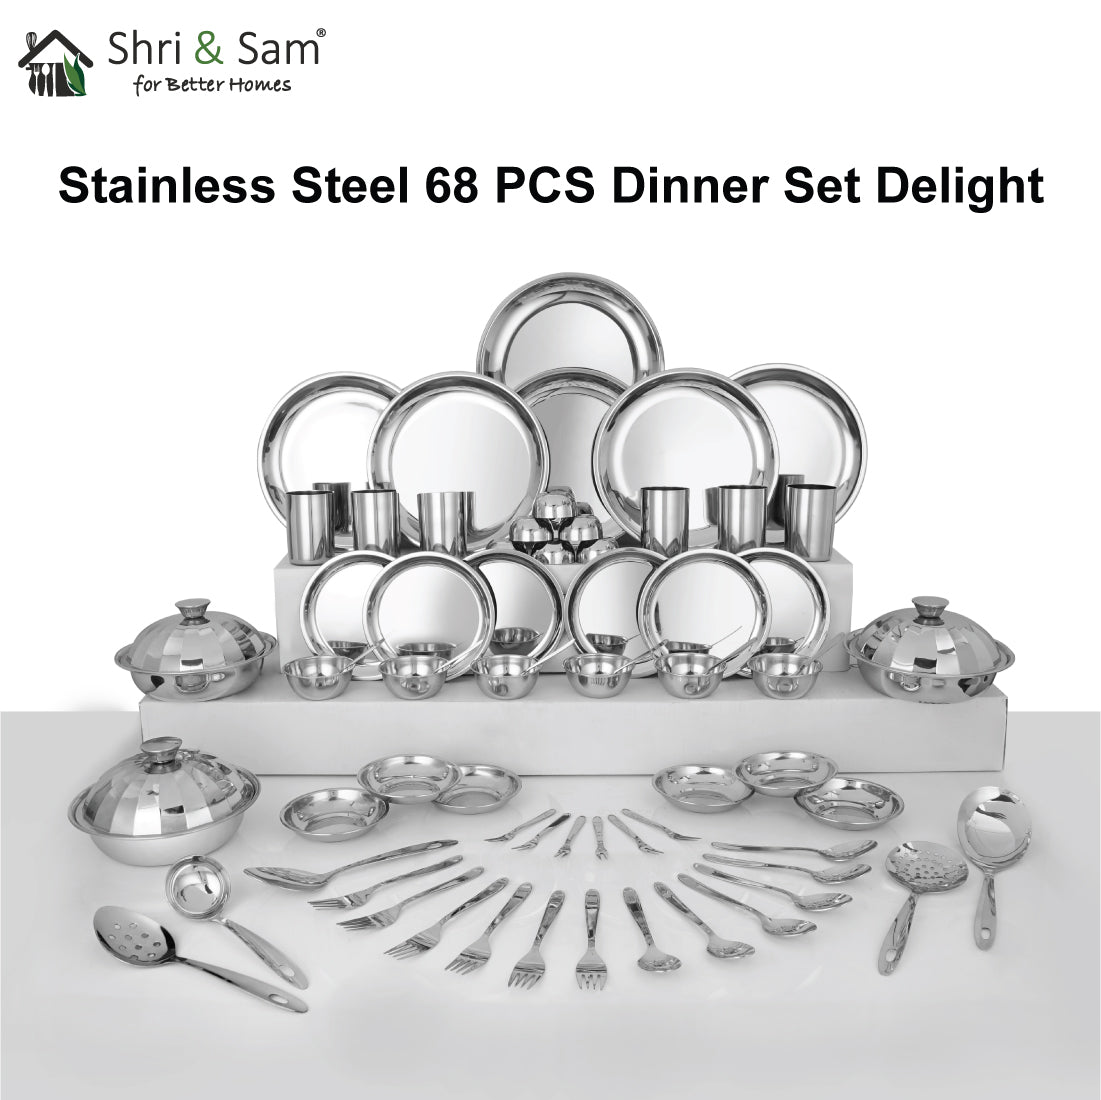 Stainless Steel 68 PCS Dinner set (6 People) Delight